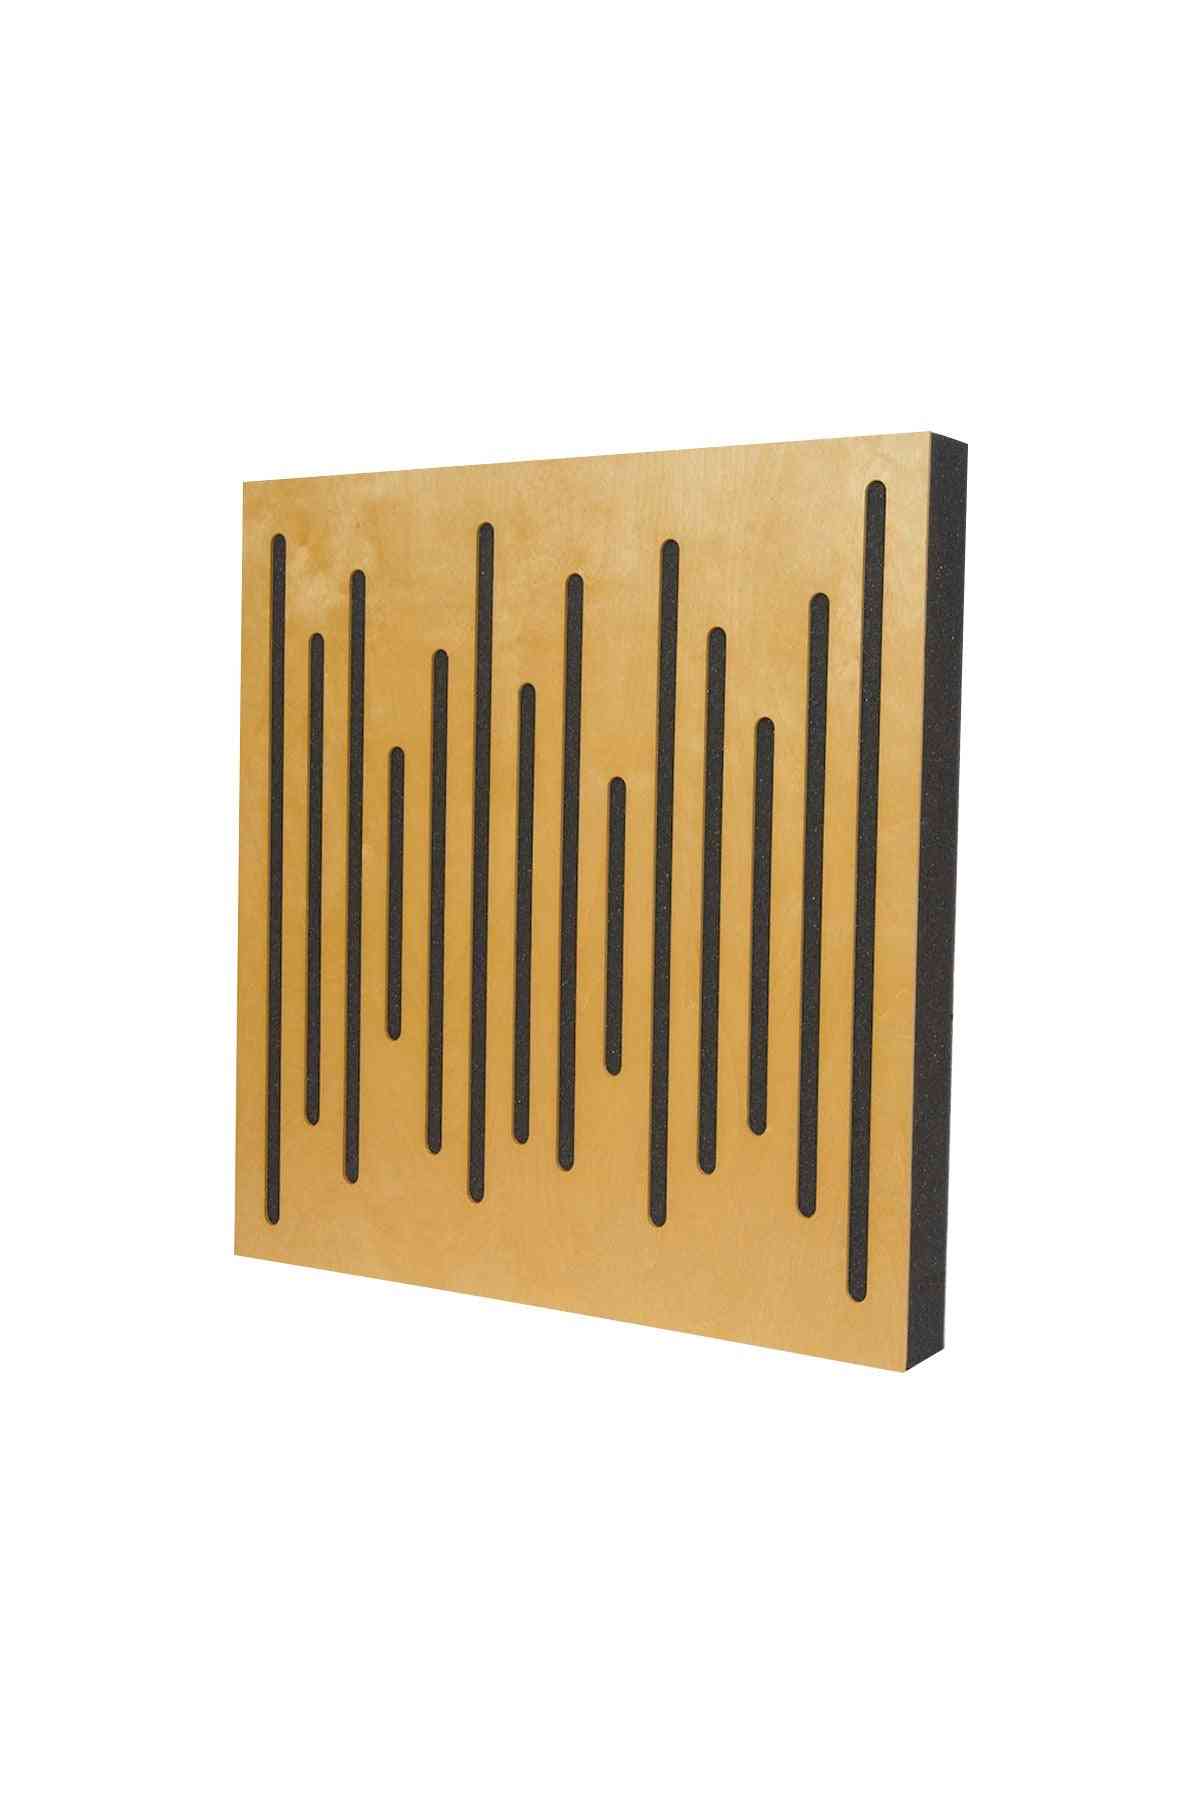 Acoustic Wood Diffuser, Panel Music Studio, Efficient Solution Wall Decor Design Handmade